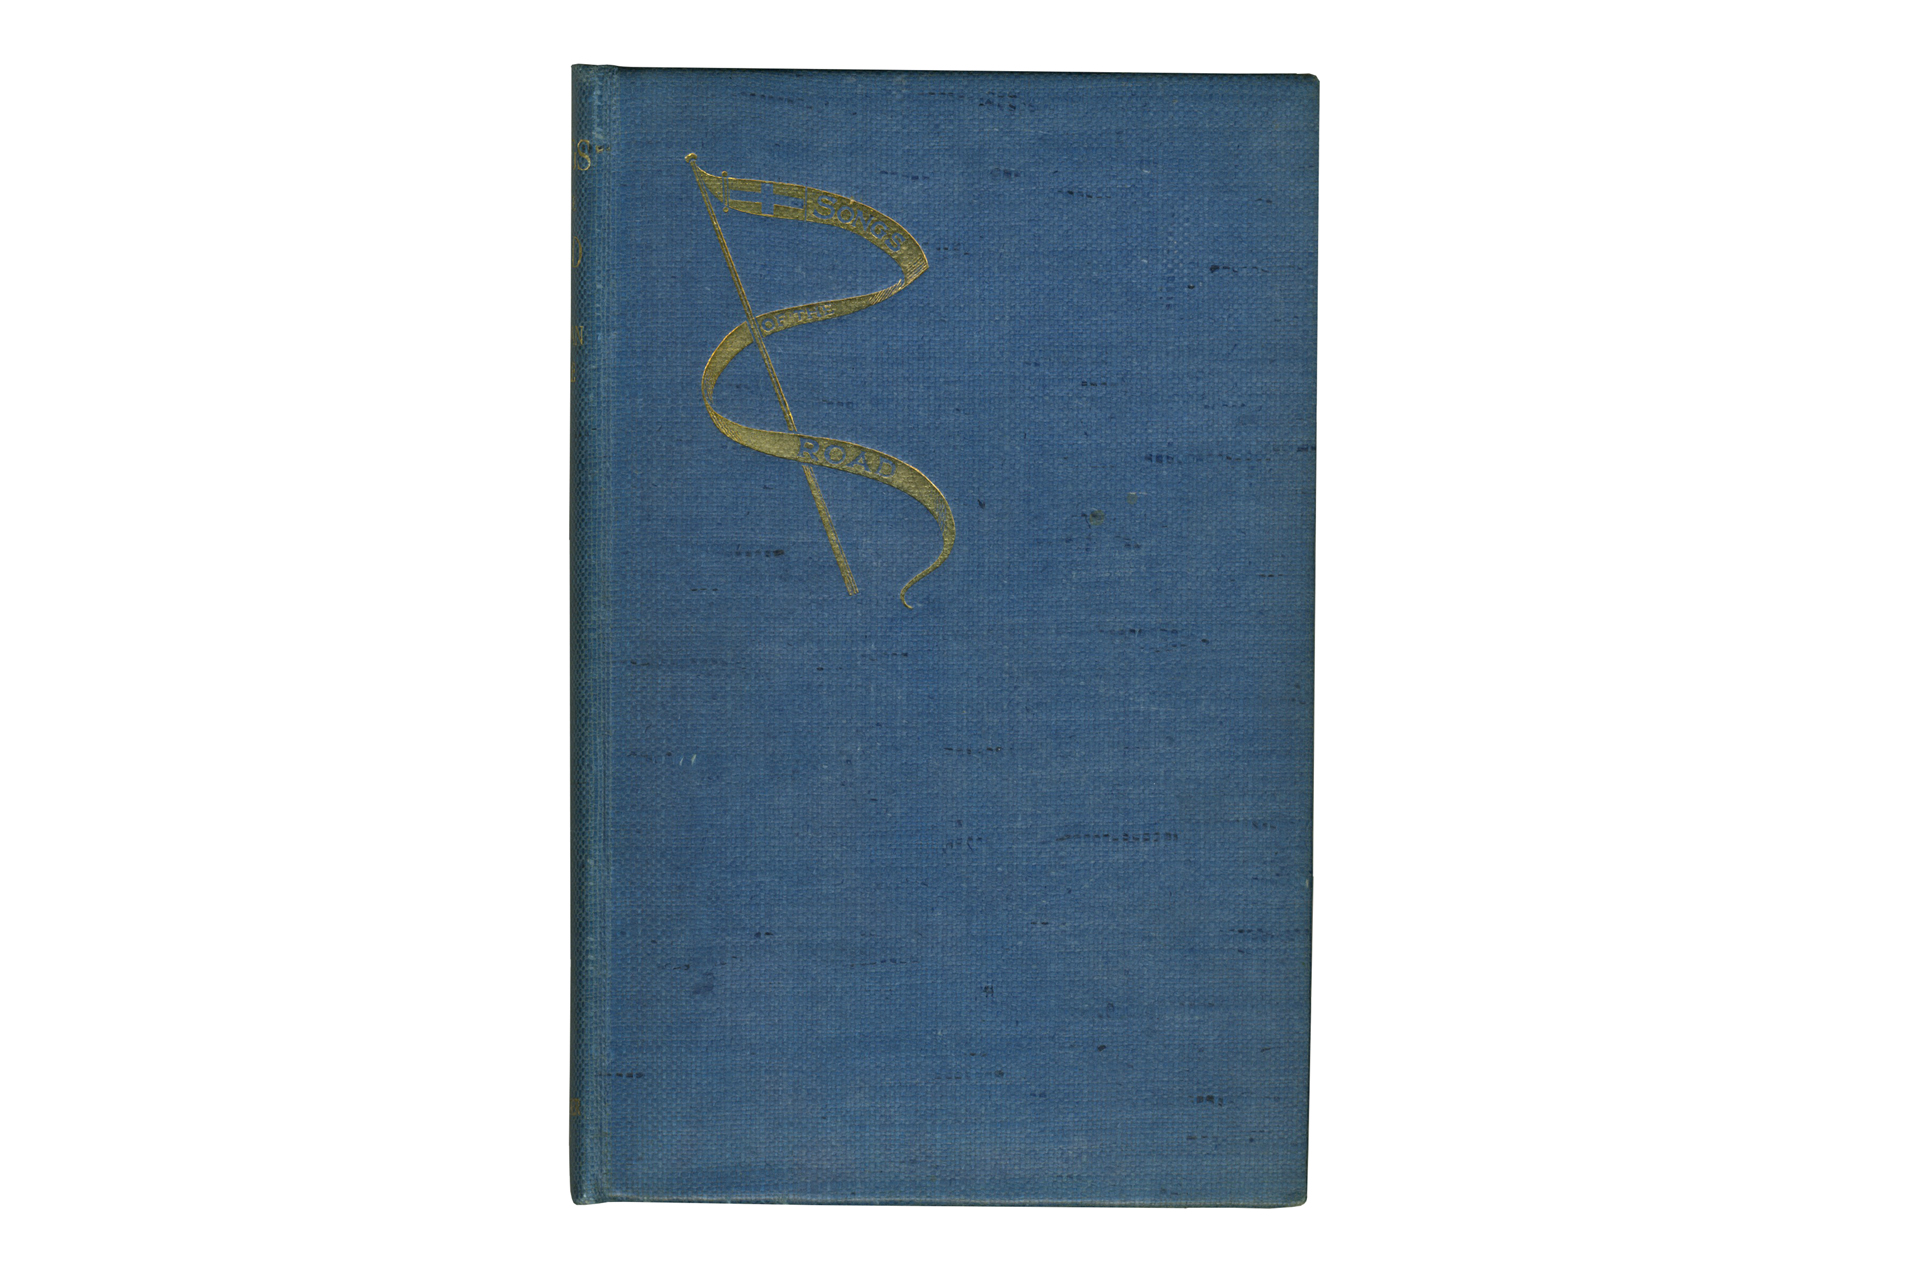 Songs of the Road - Arthur Conan Doyle - 1911 First Edition